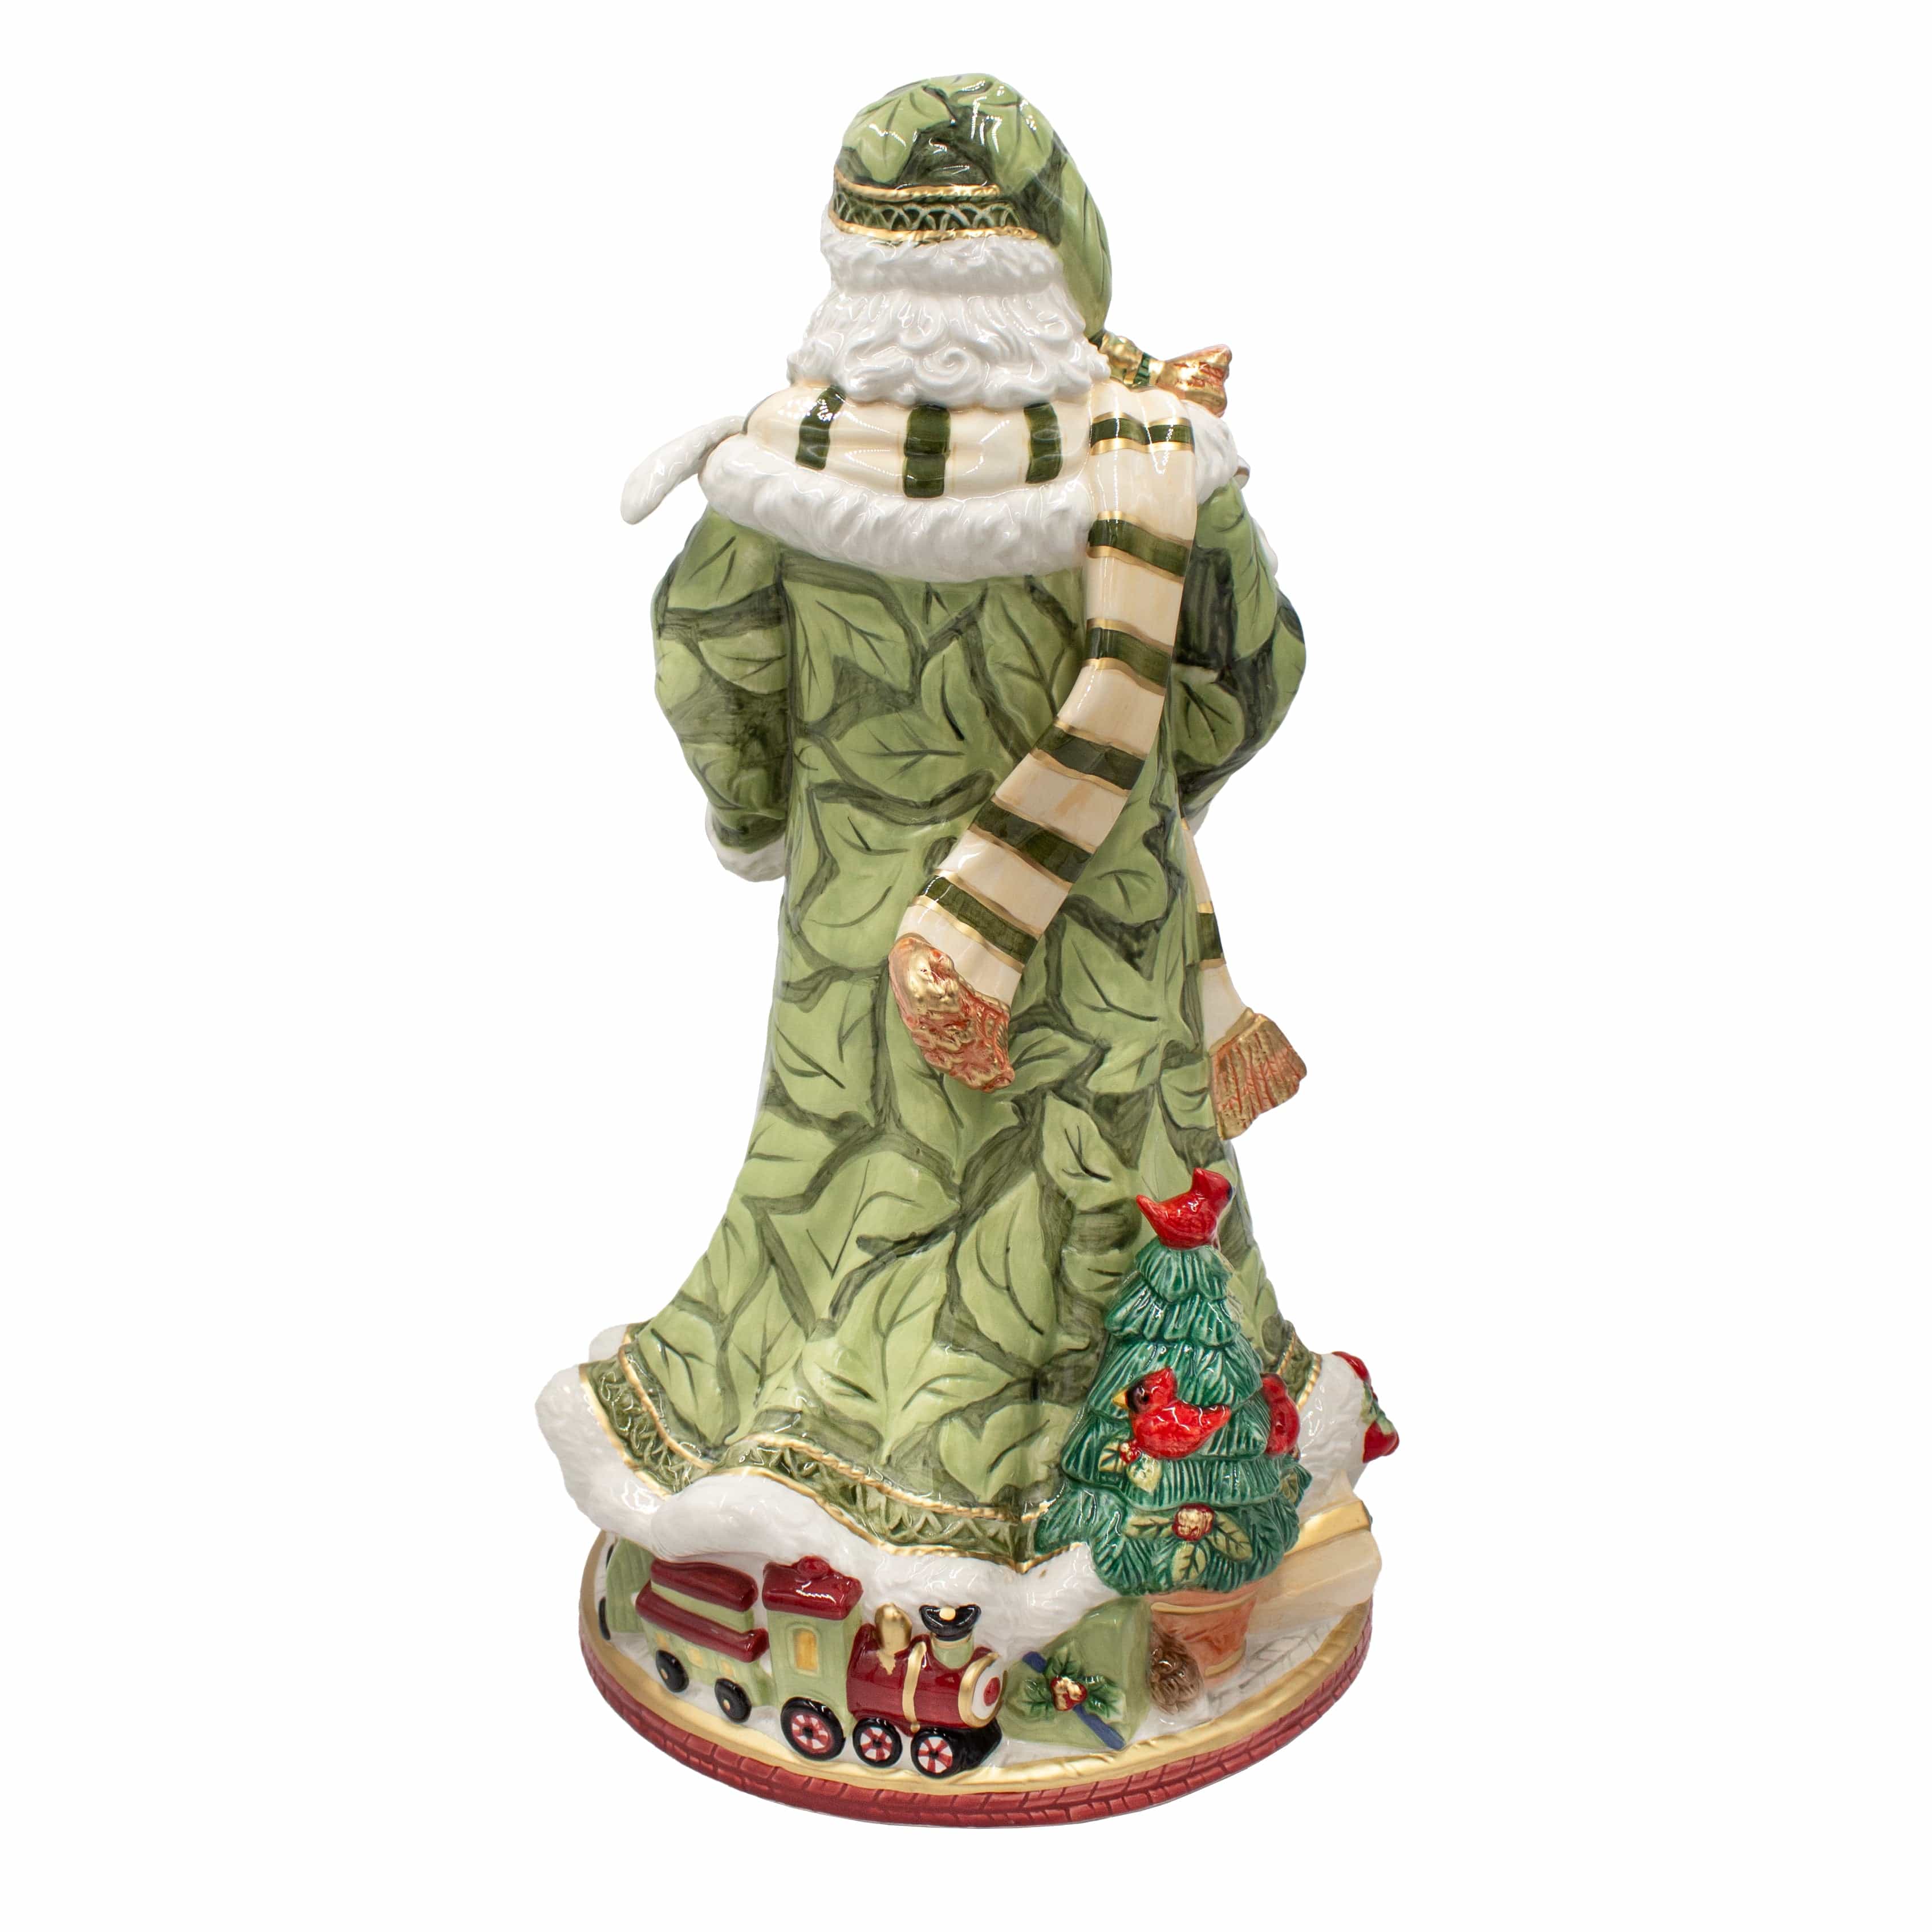 Holiday Home Green Santa Figurine, 18.75 IN